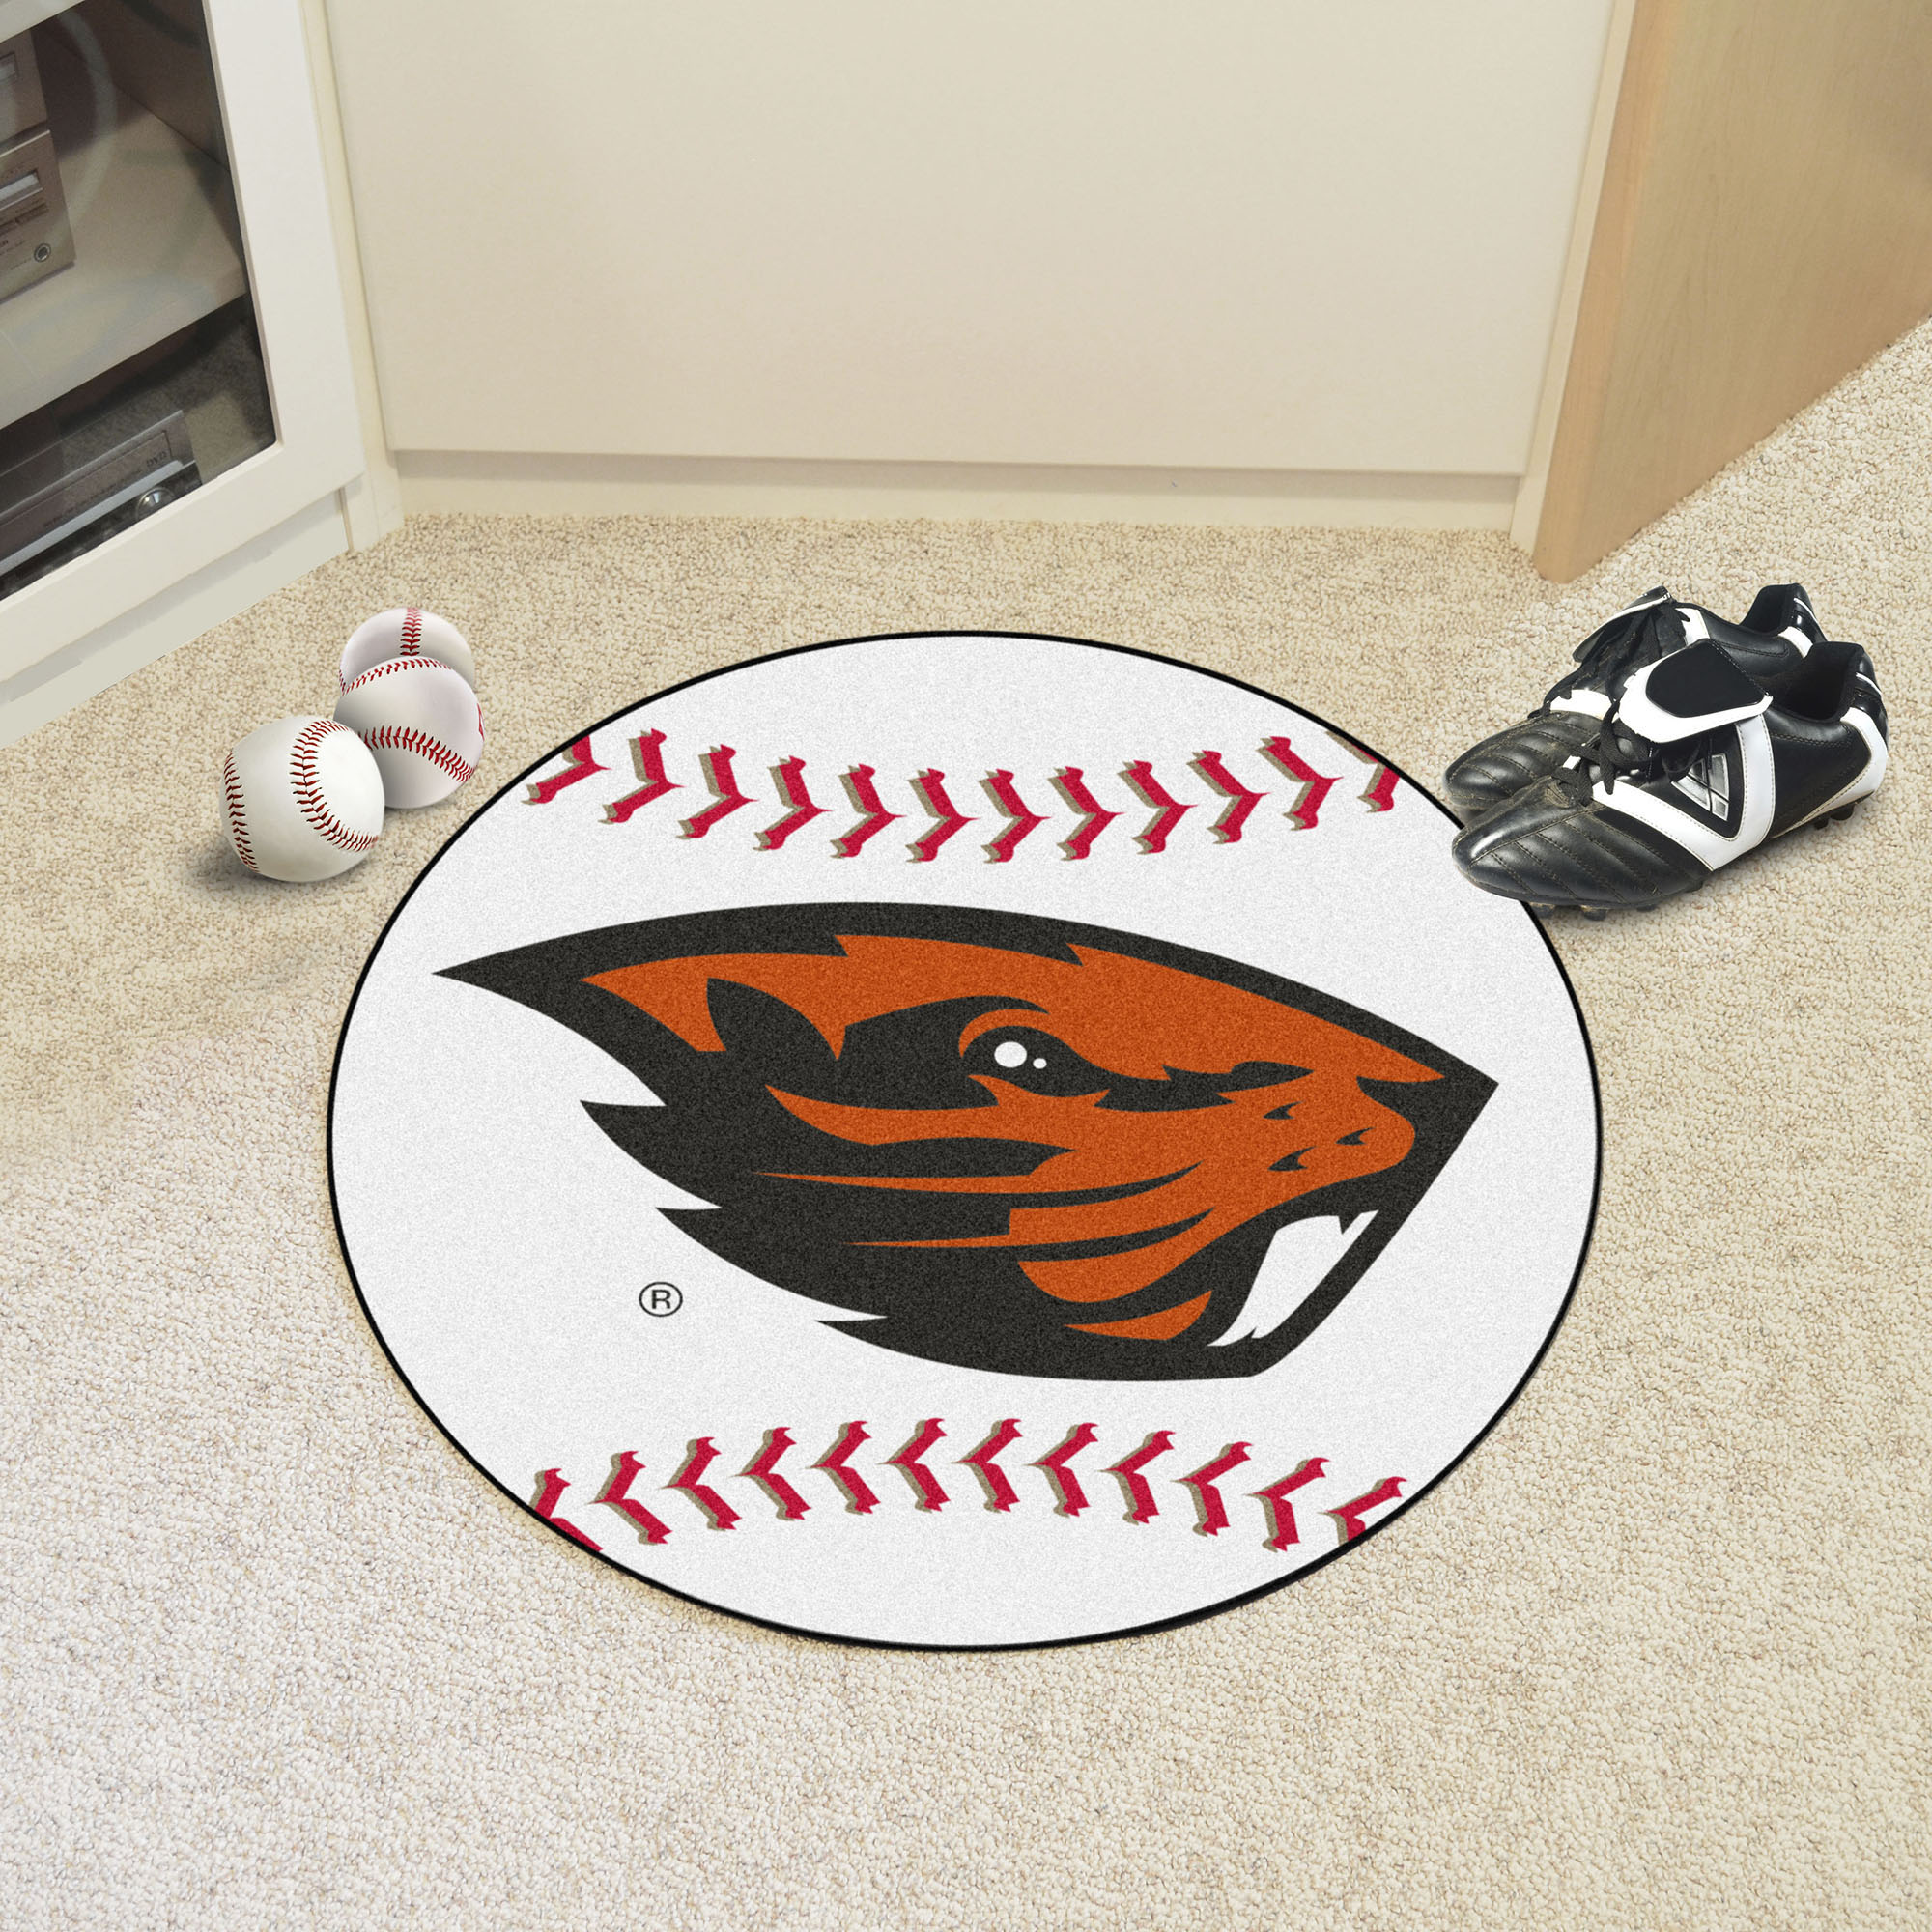 Oregon State University Ball Shaped Area rugs (Ball Shaped Area Rugs: Baseball)